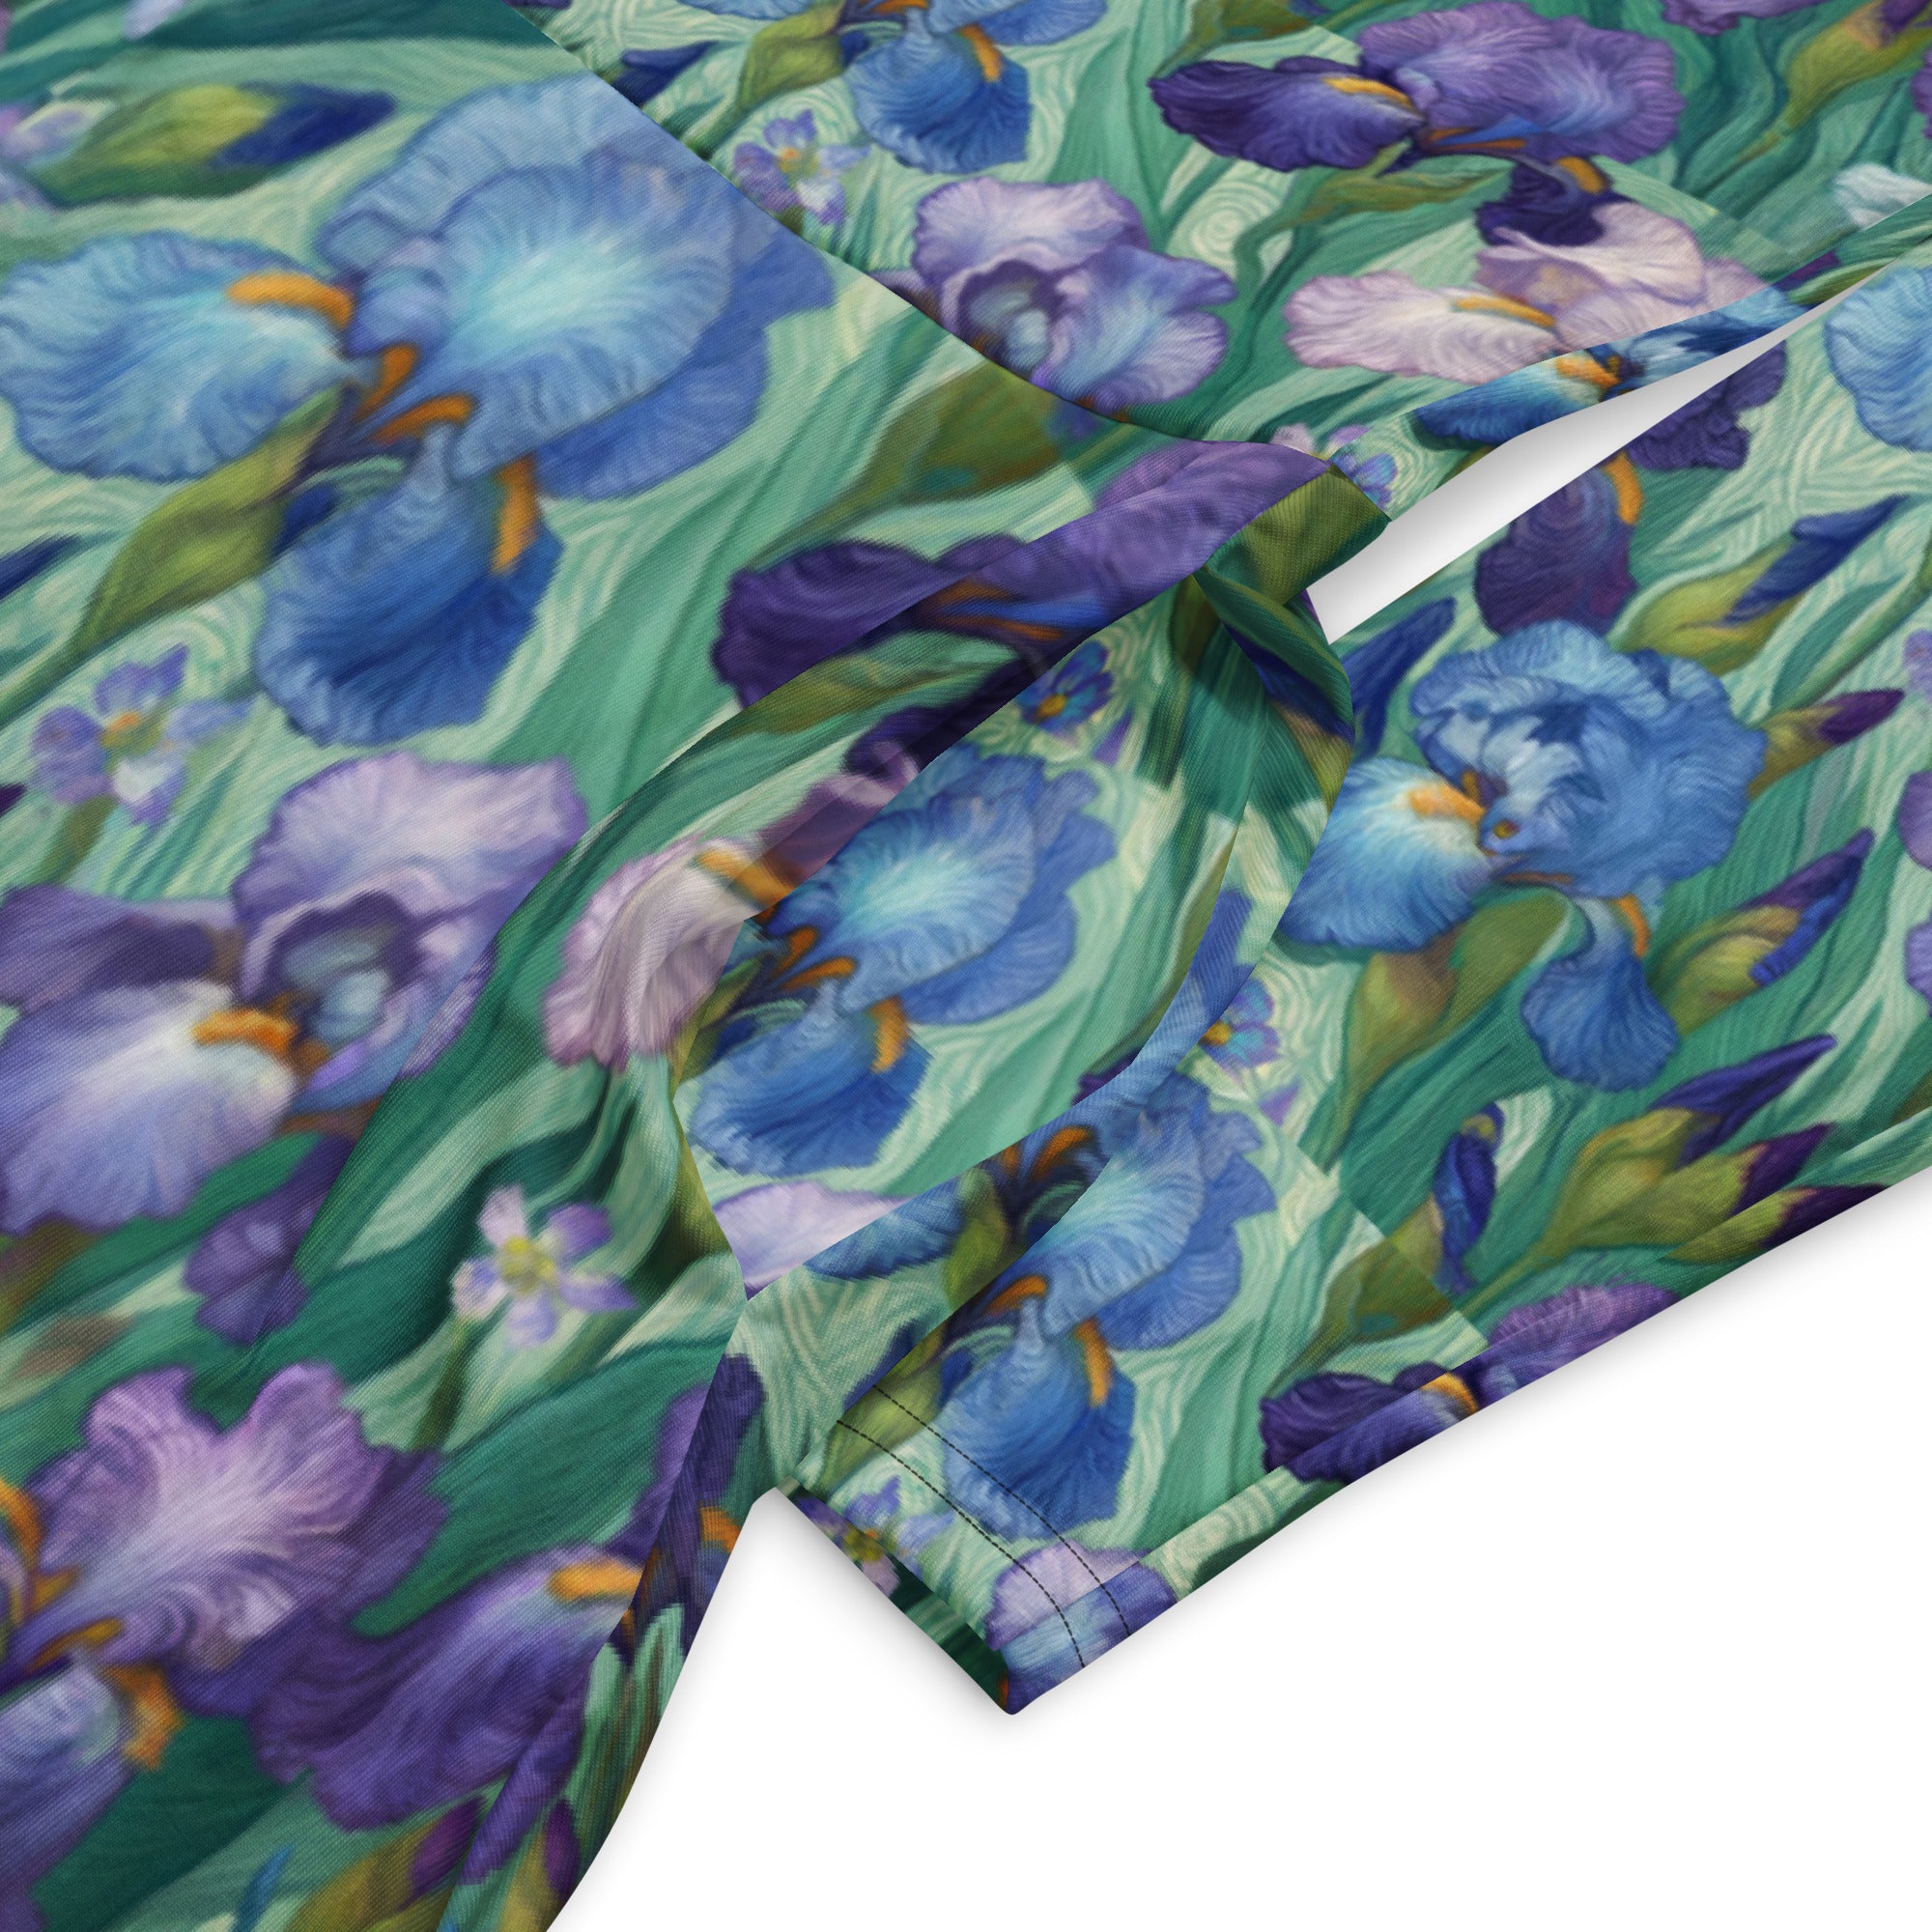 Vincent van Gogh 'Irises' Famous Painting Long Sleeve Midi Dress | Premium Art Midi Dress